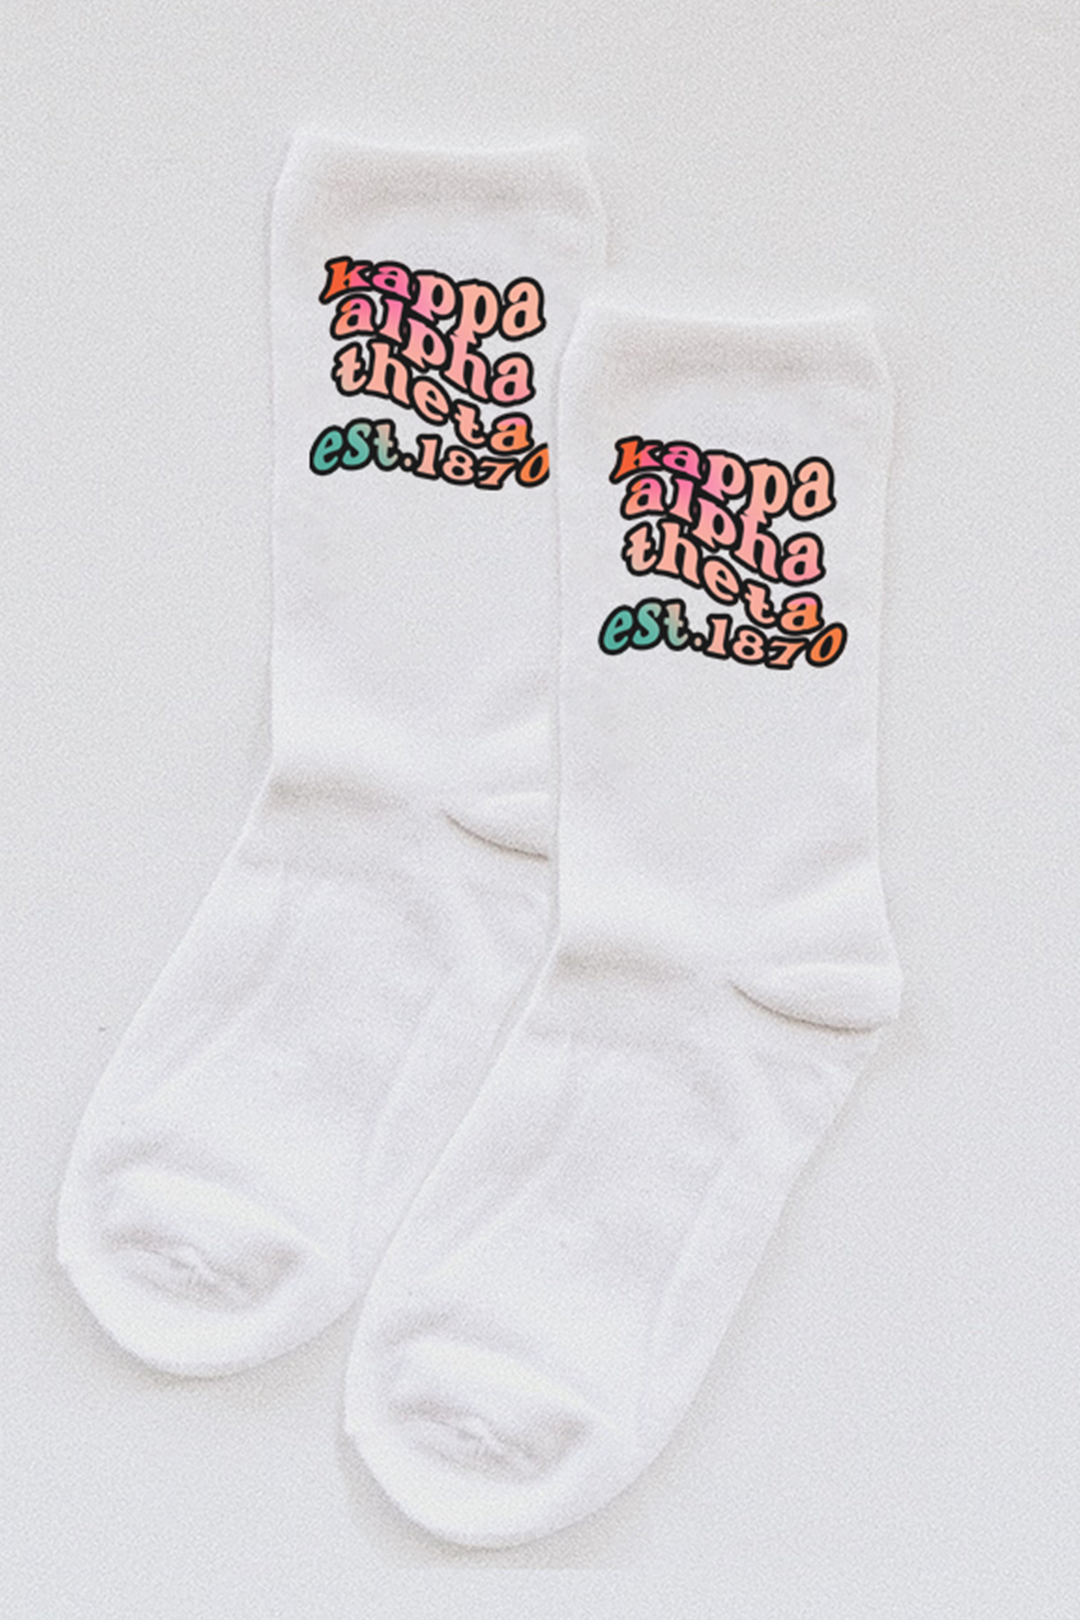 Gradient socks - Kappa Alpha Theta